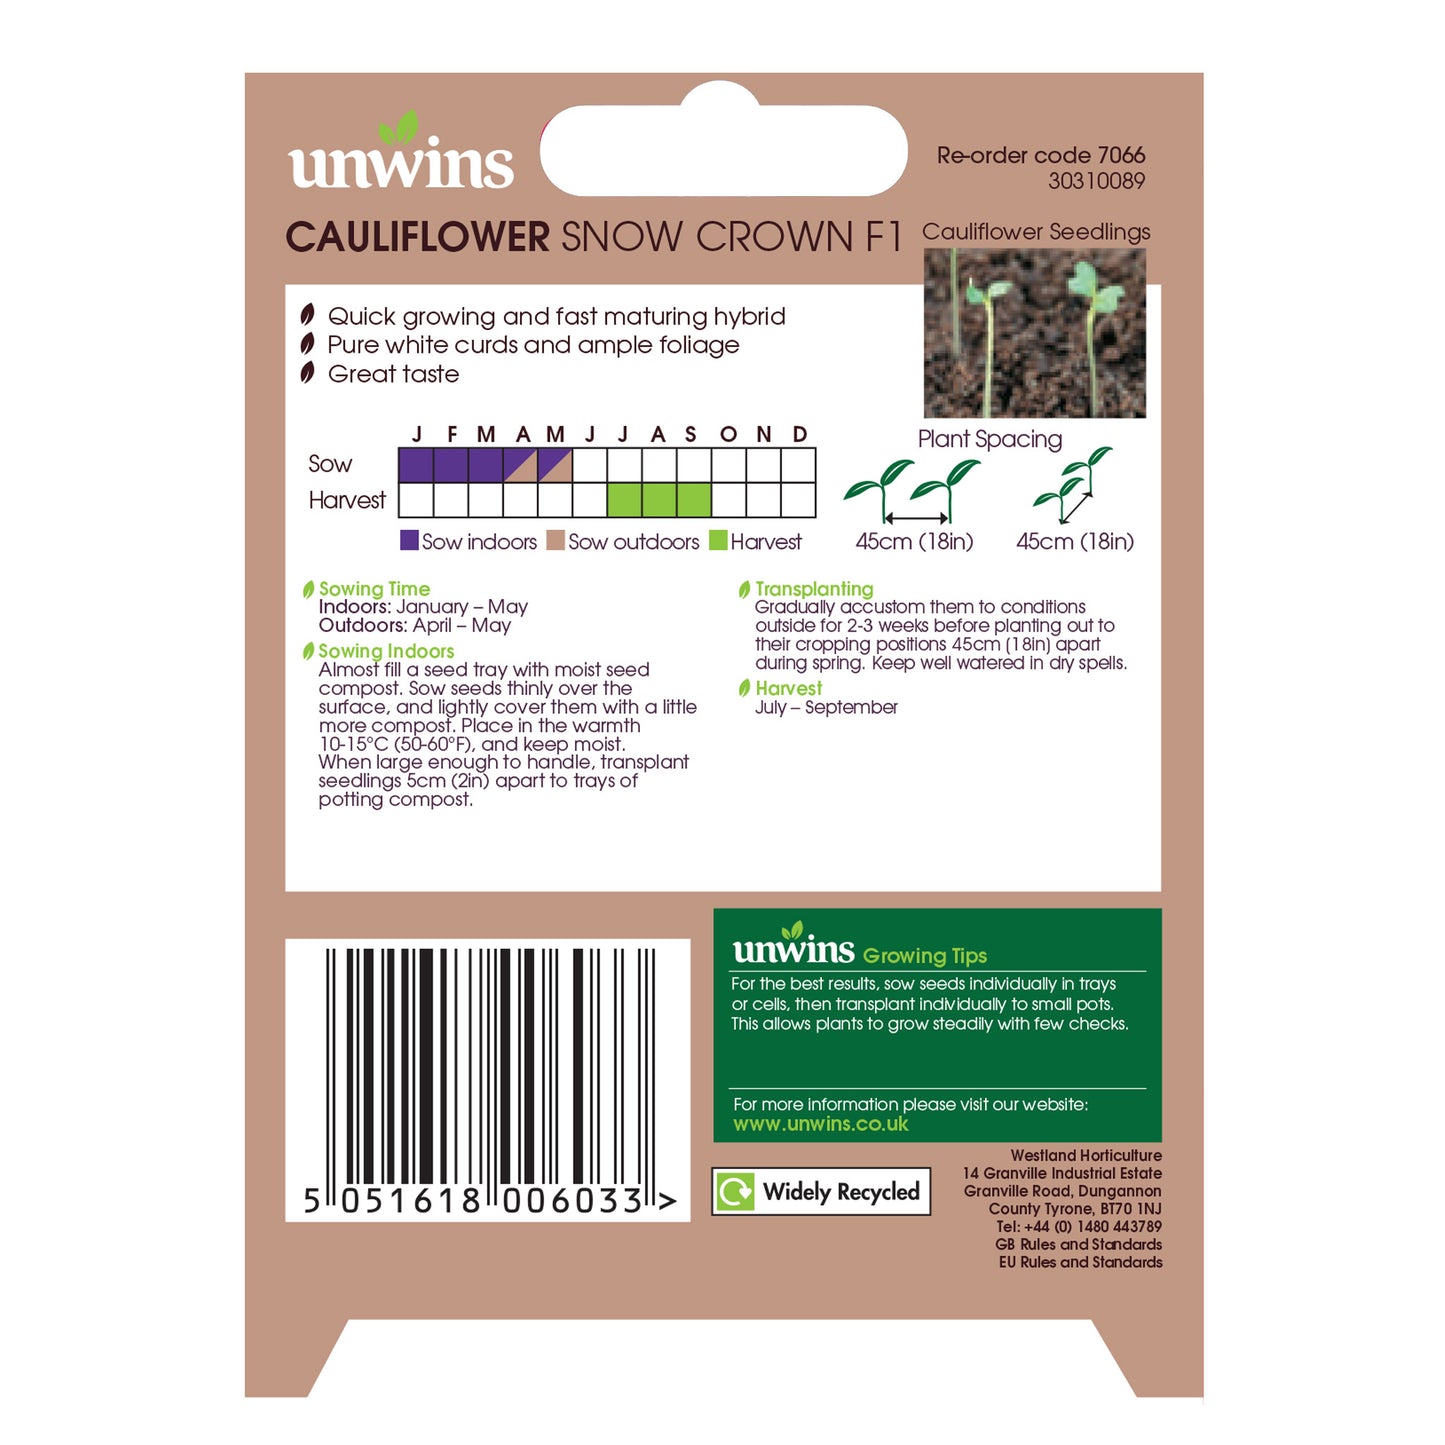 Unwins Cauliflower Snow Crown F1 Seeds back